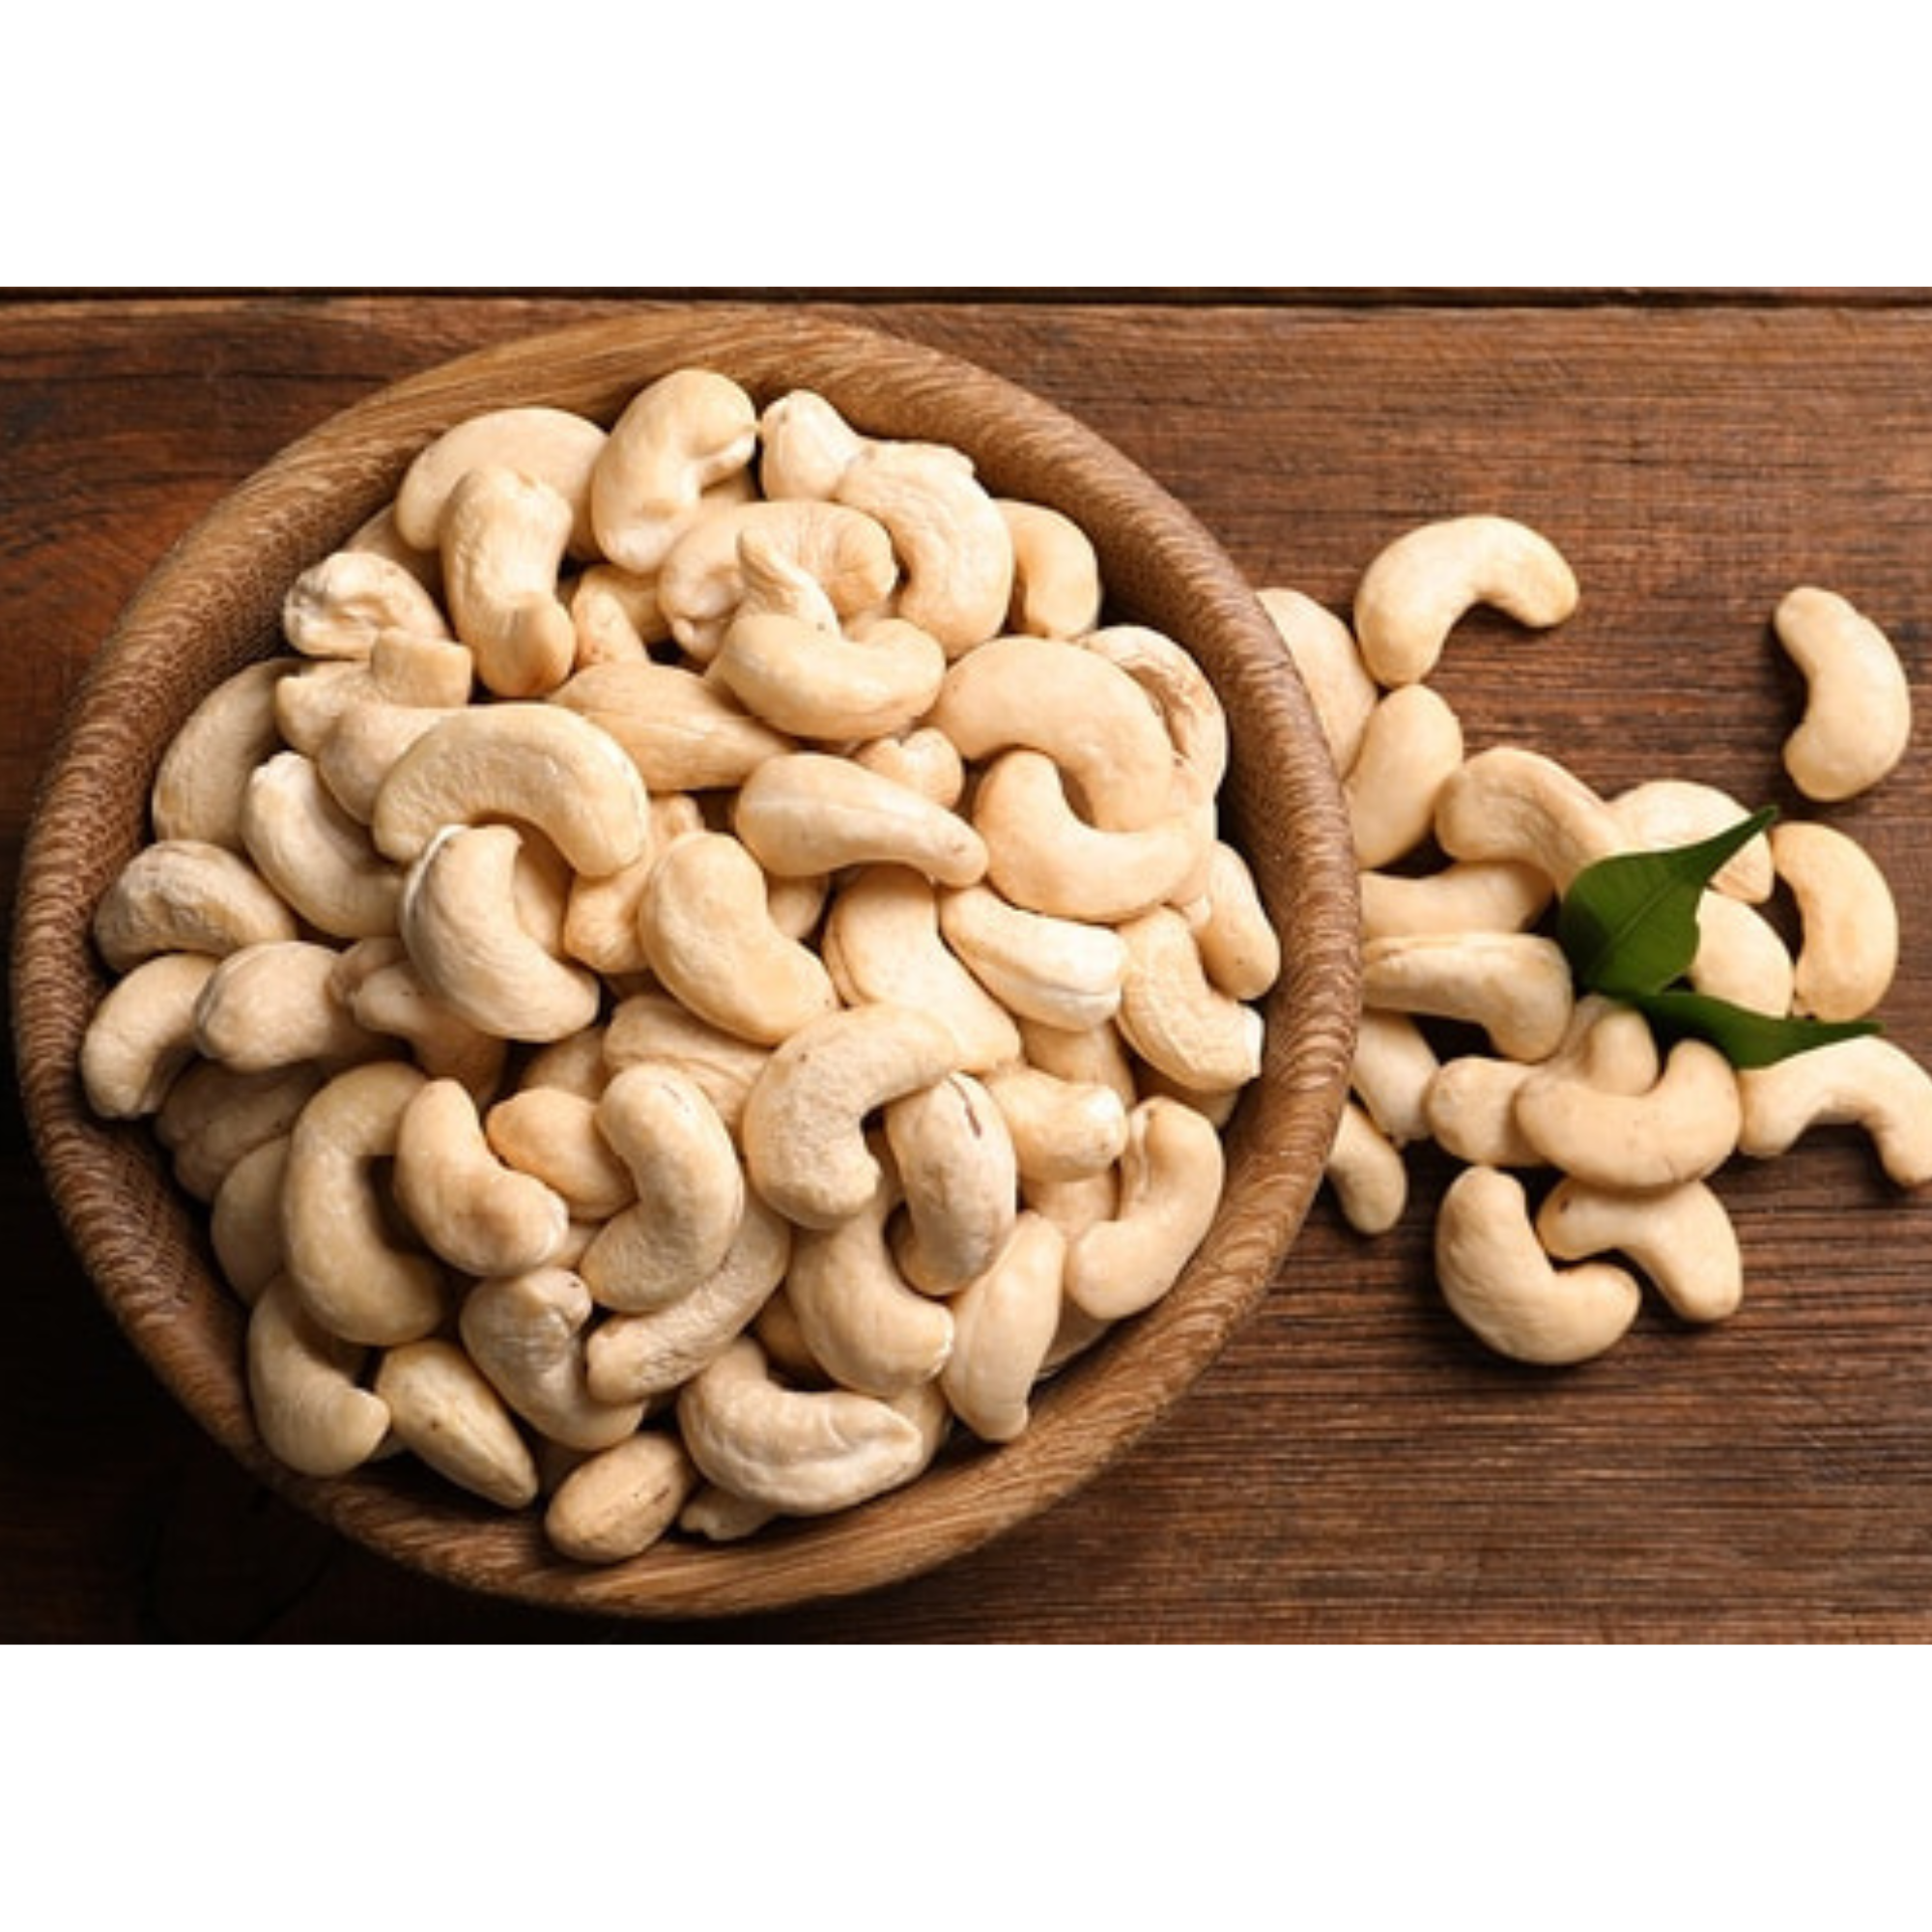 Heka Bites Whole Daily Cashews (Kaju) 500 g